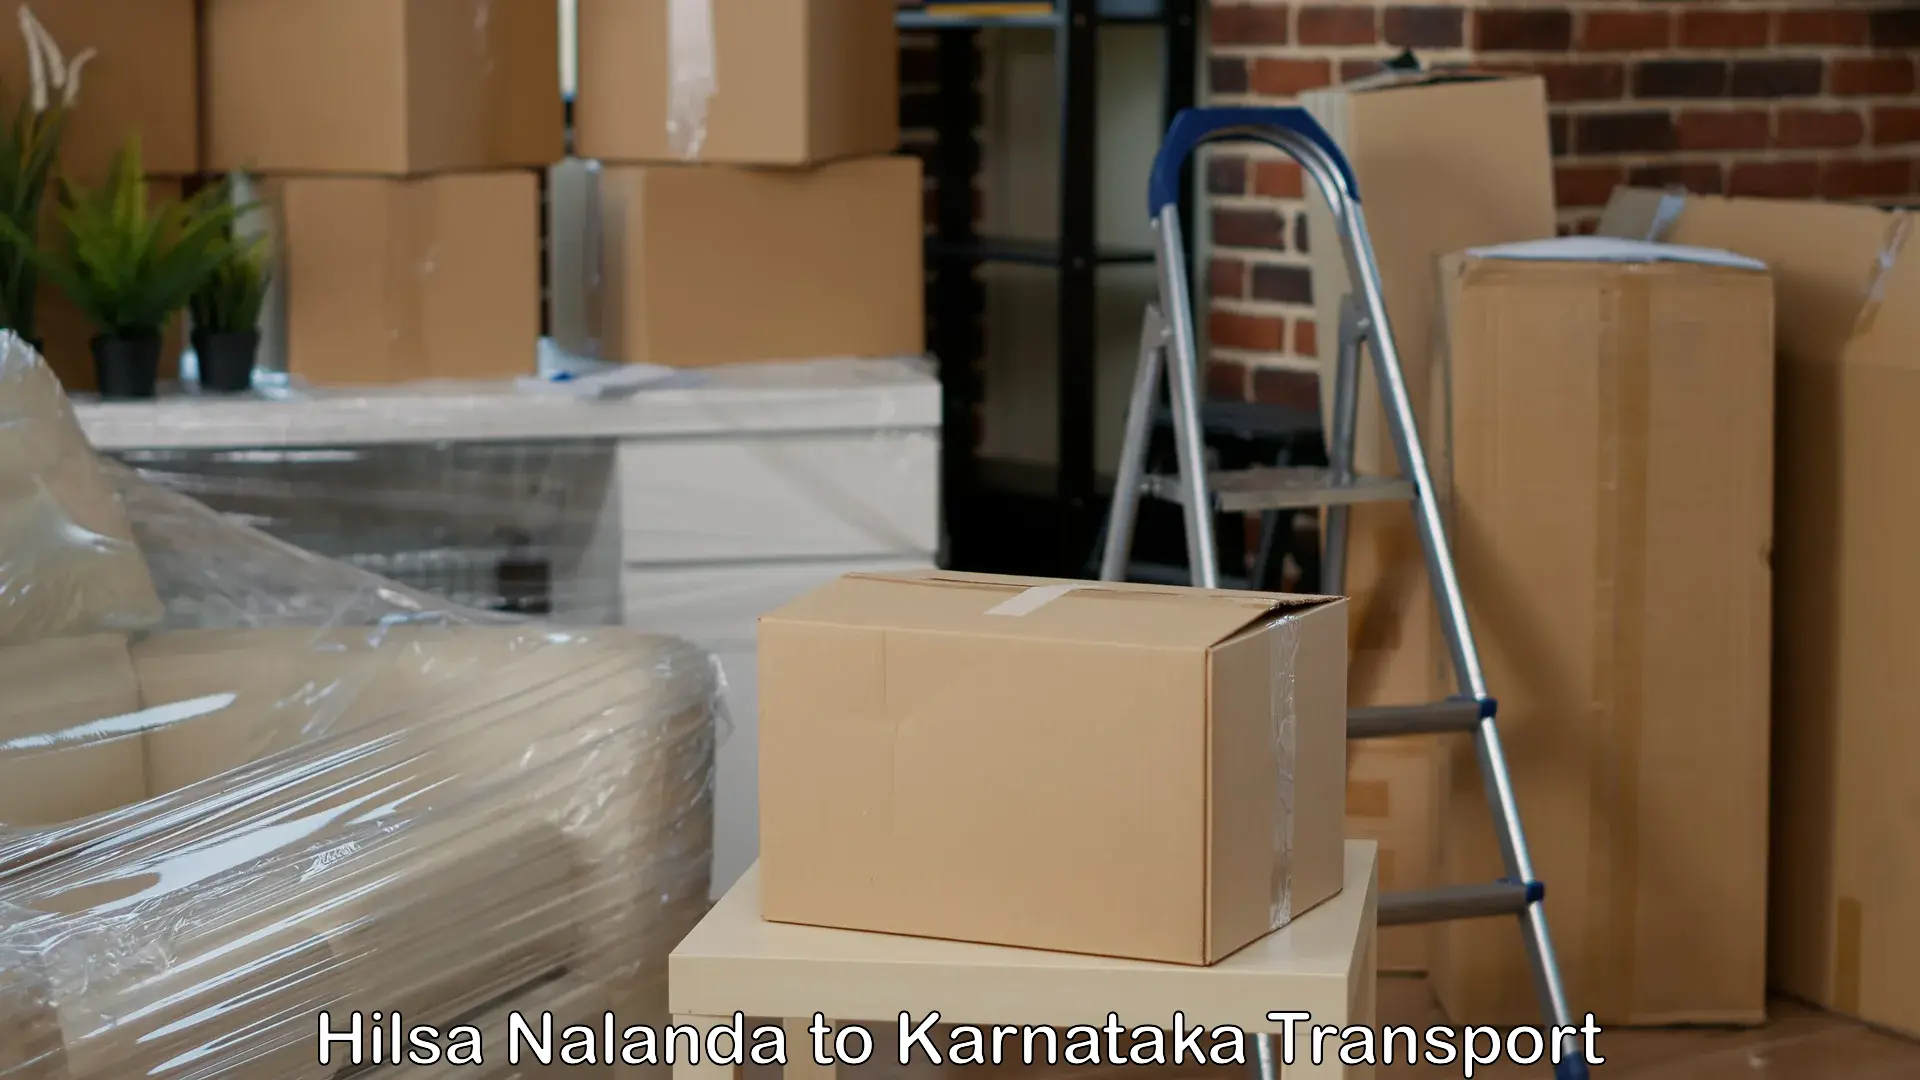 Shipping partner Hilsa Nalanda to Hassan